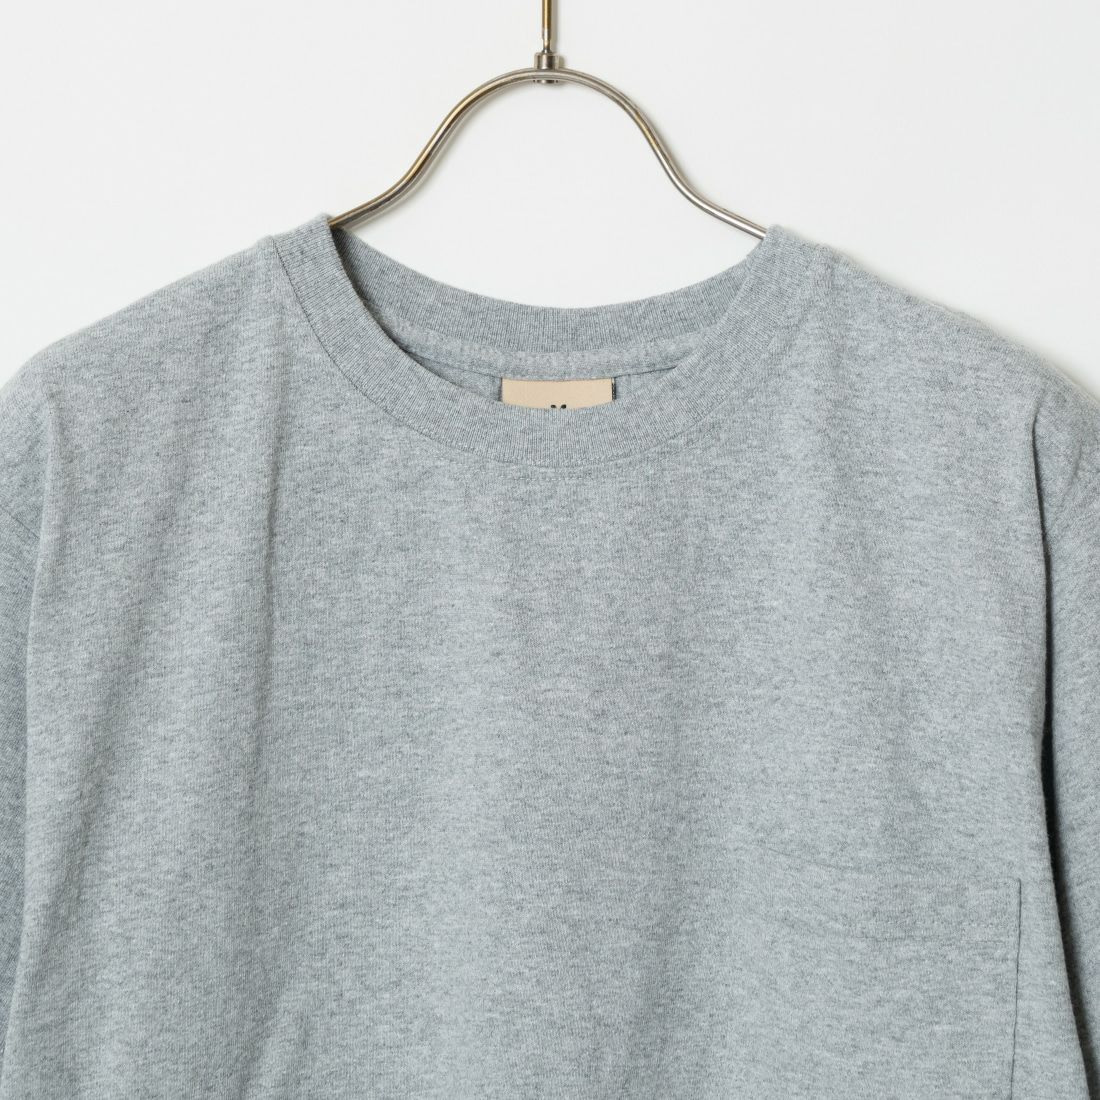 Goodwear [グッドウェア] レギュラーフィットTシャツ [GDW-SSV-000100] M.GRAY